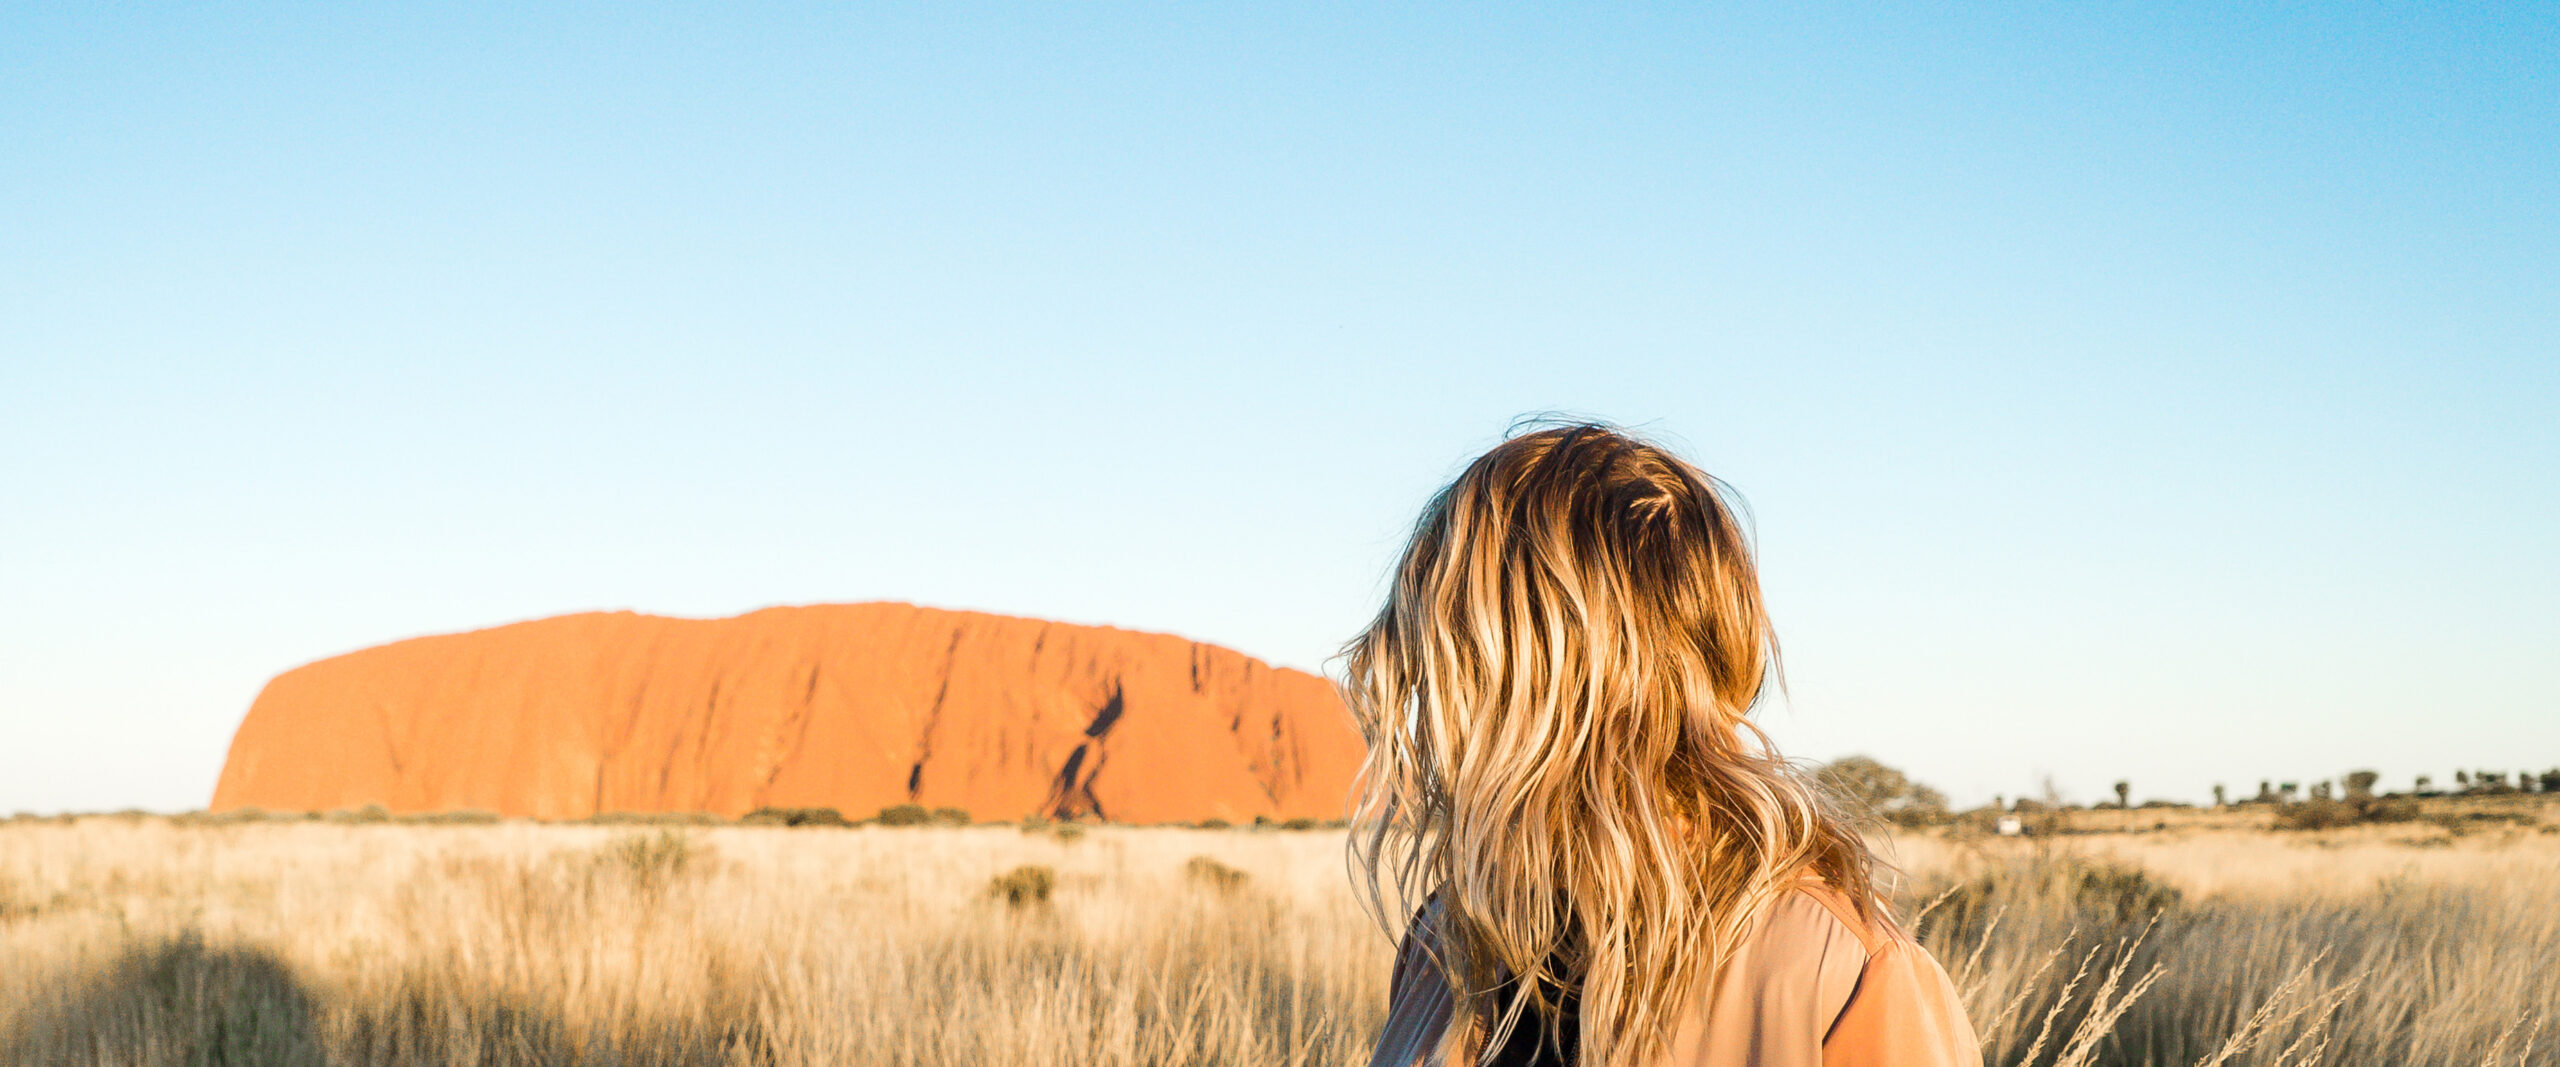 Girl Looking at Uluru in the distance